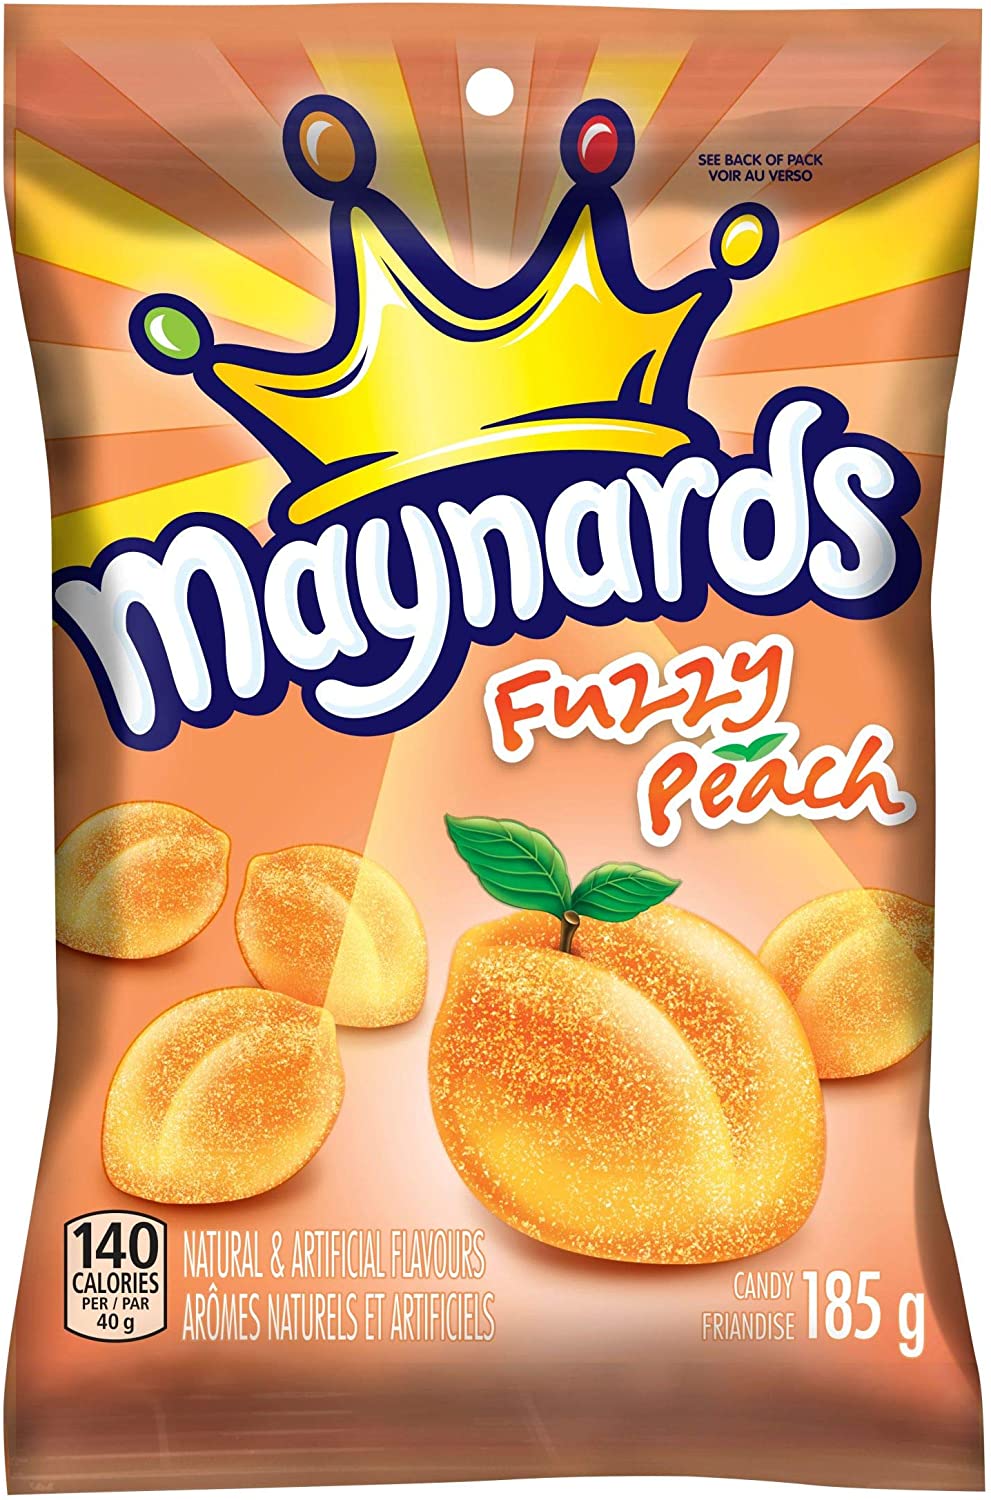 Maynards Fuzzy Peach Candy - 185g